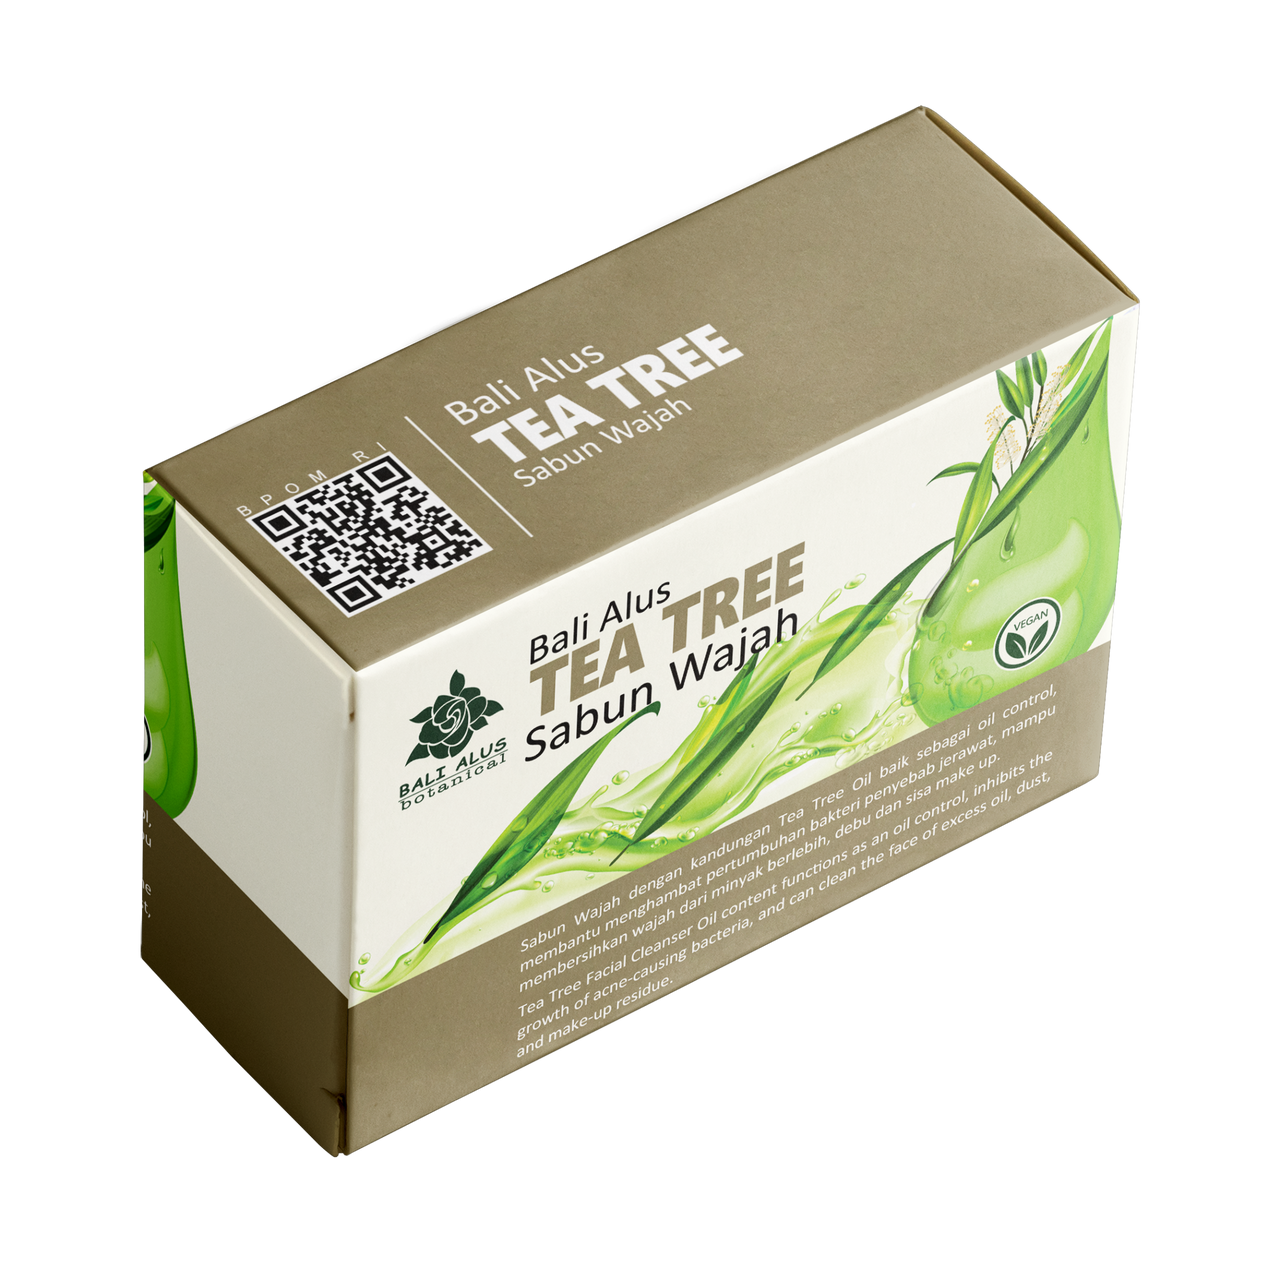 Bali Alus Face Soap Tea Tree, 110gr